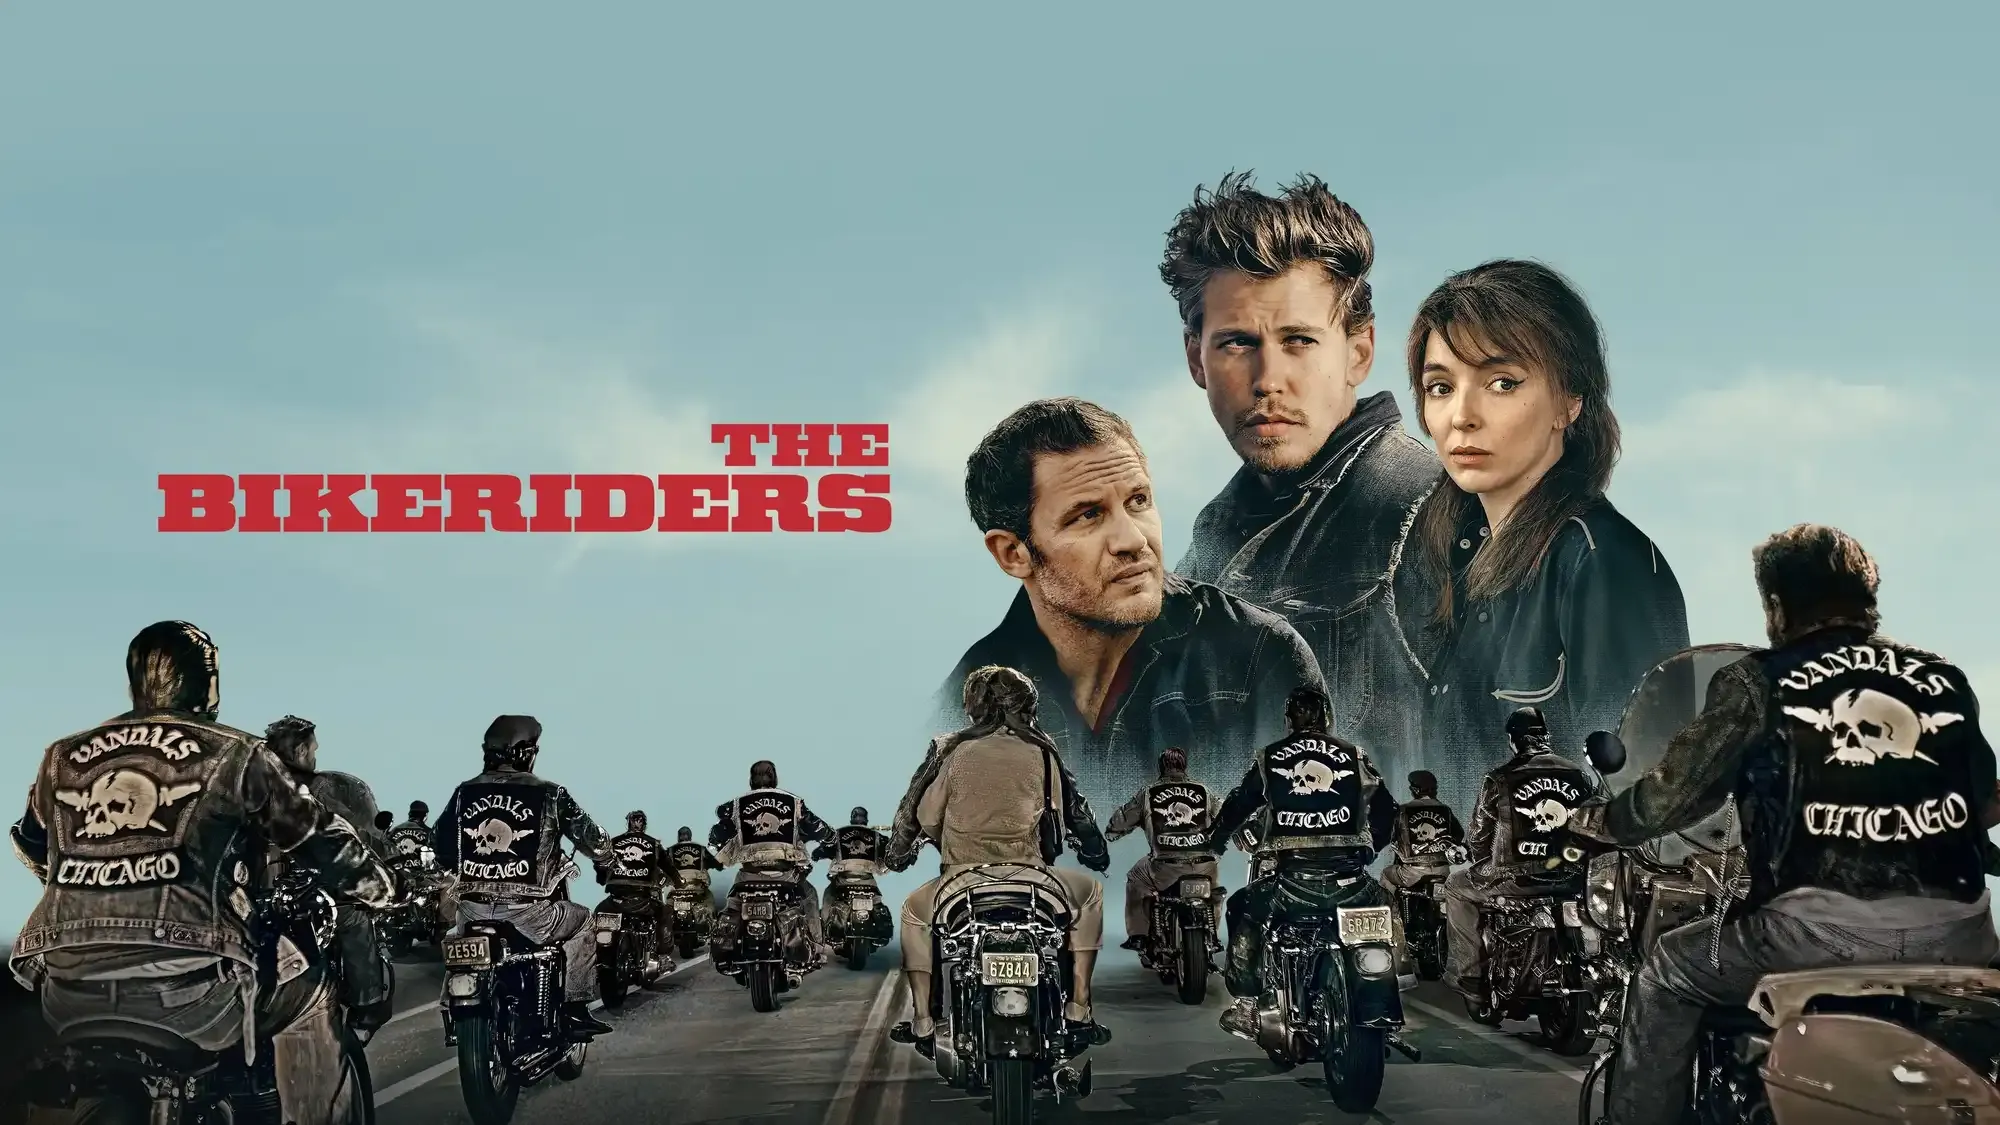 The Bikeriders movie review